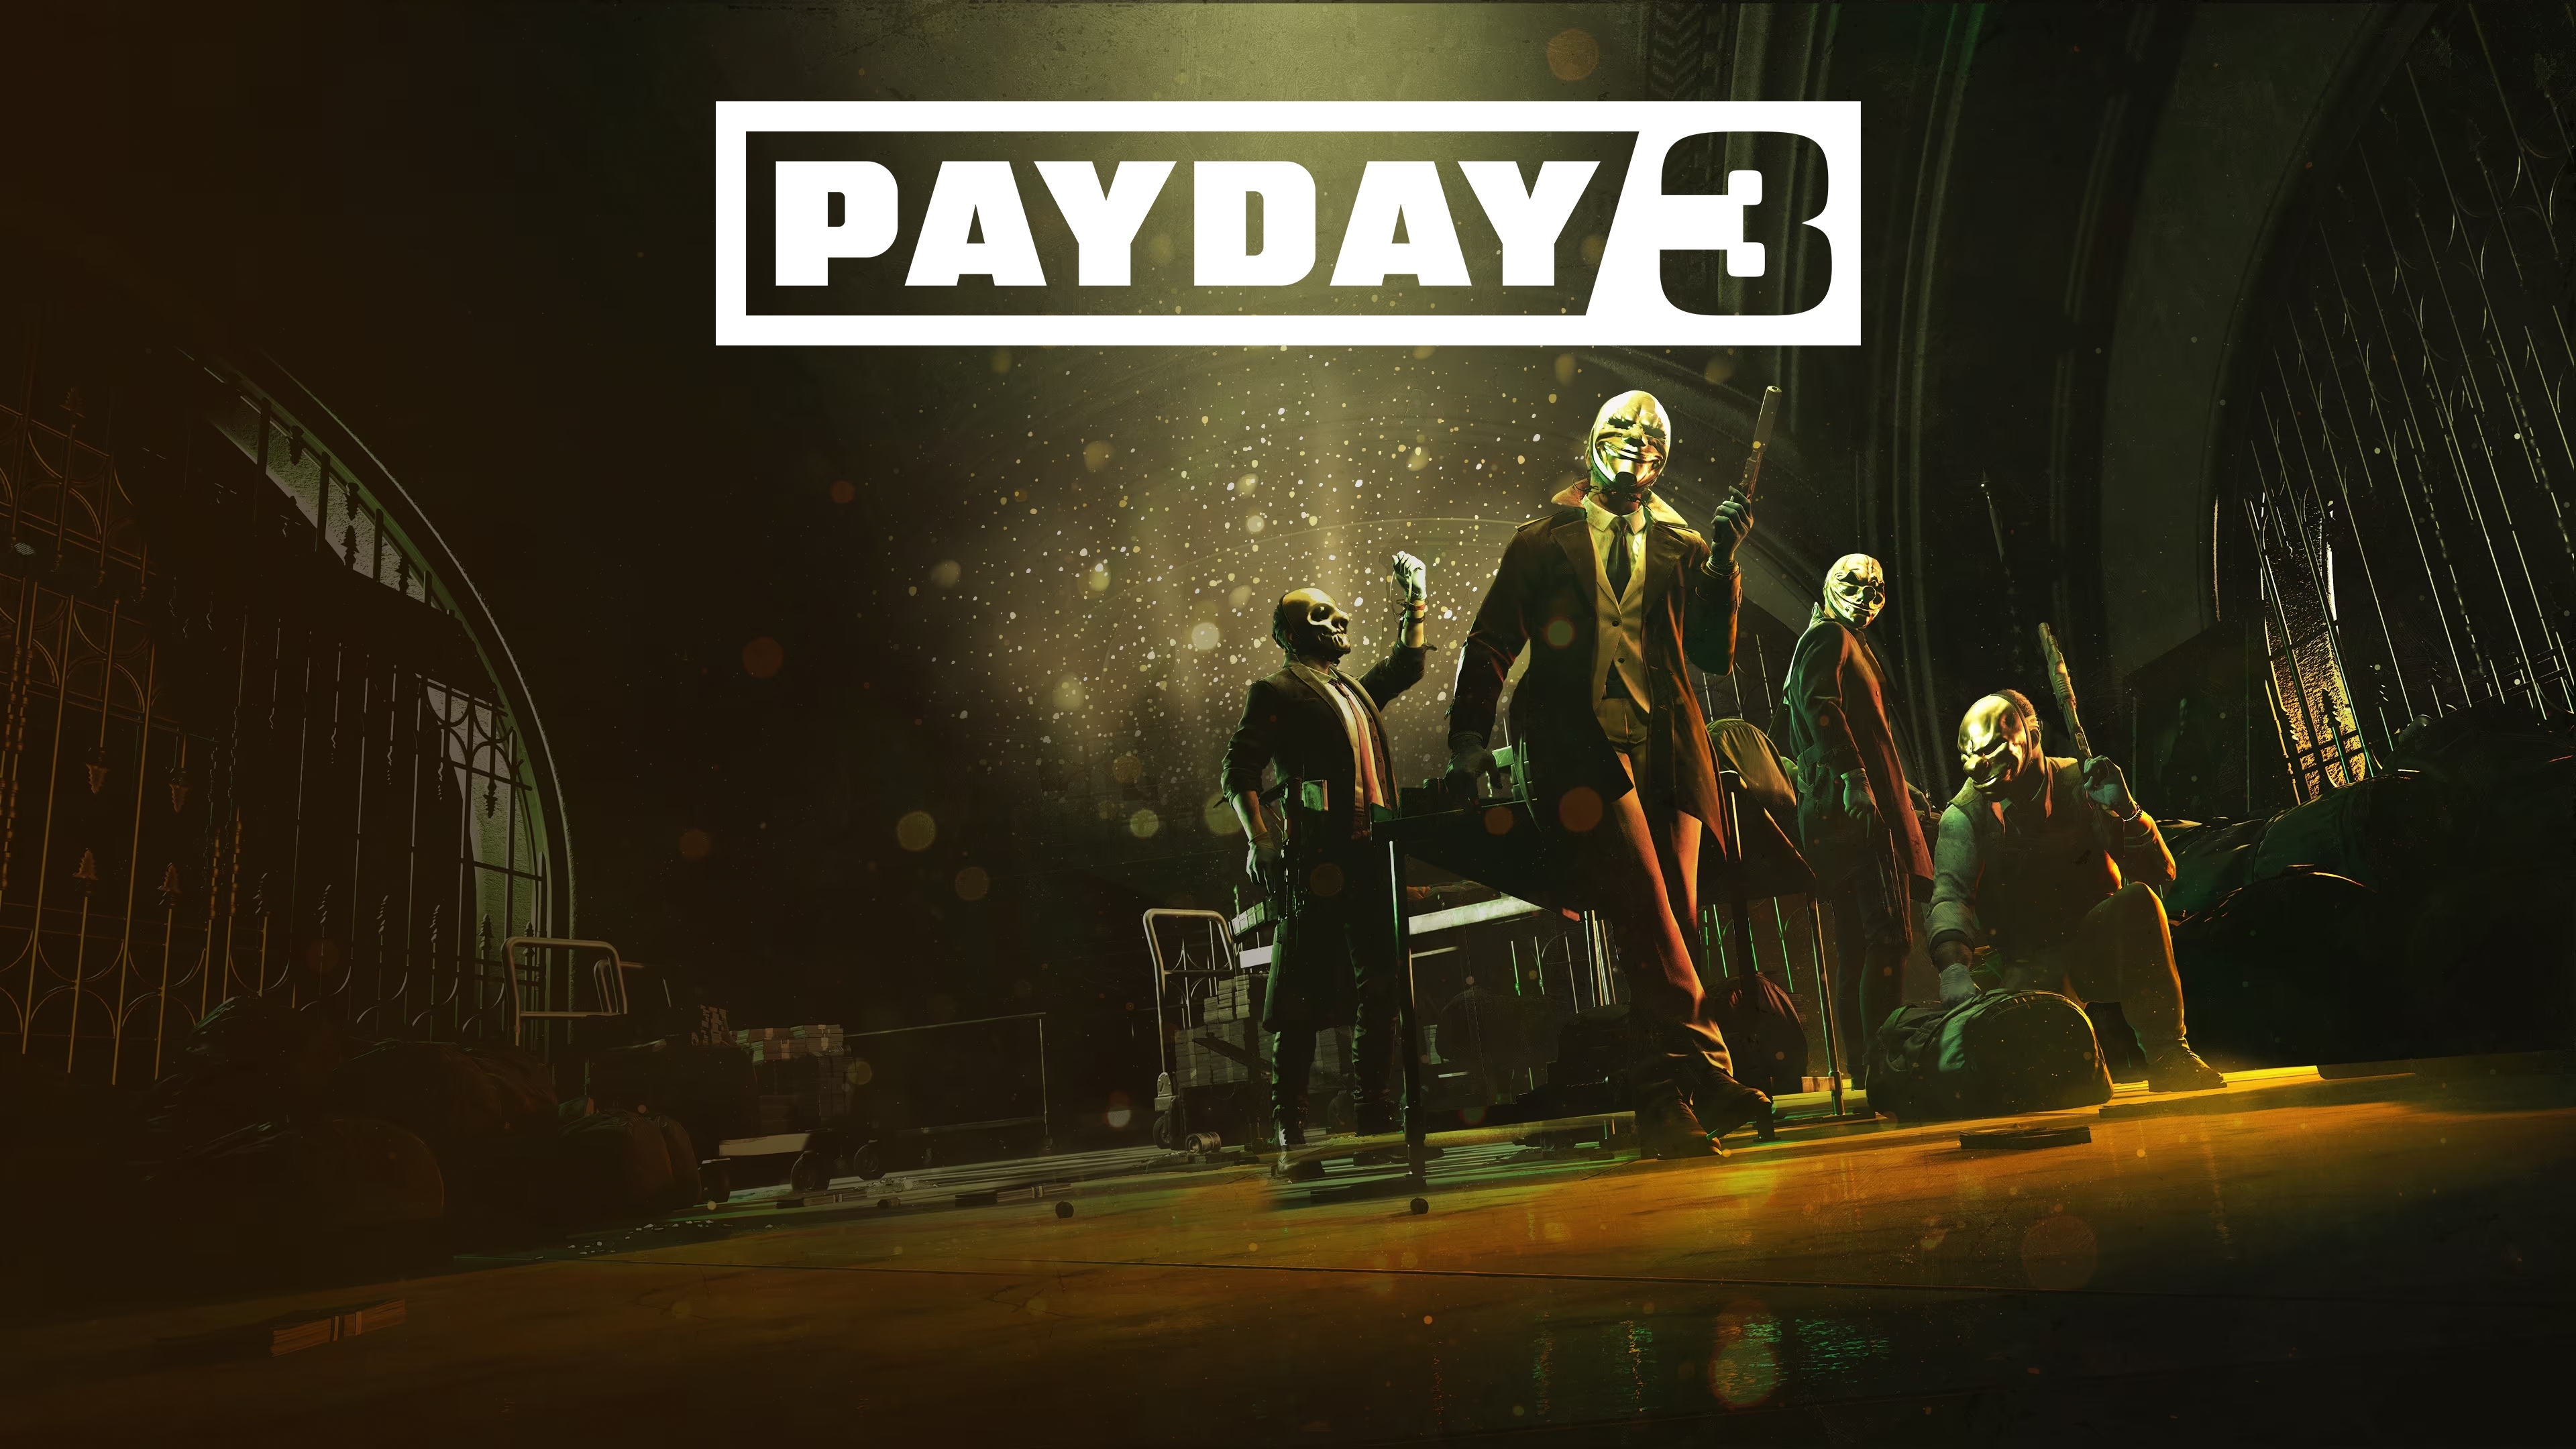 PAYDAY 3 - Xbox Series XS - Mídia Digital - NeedGames